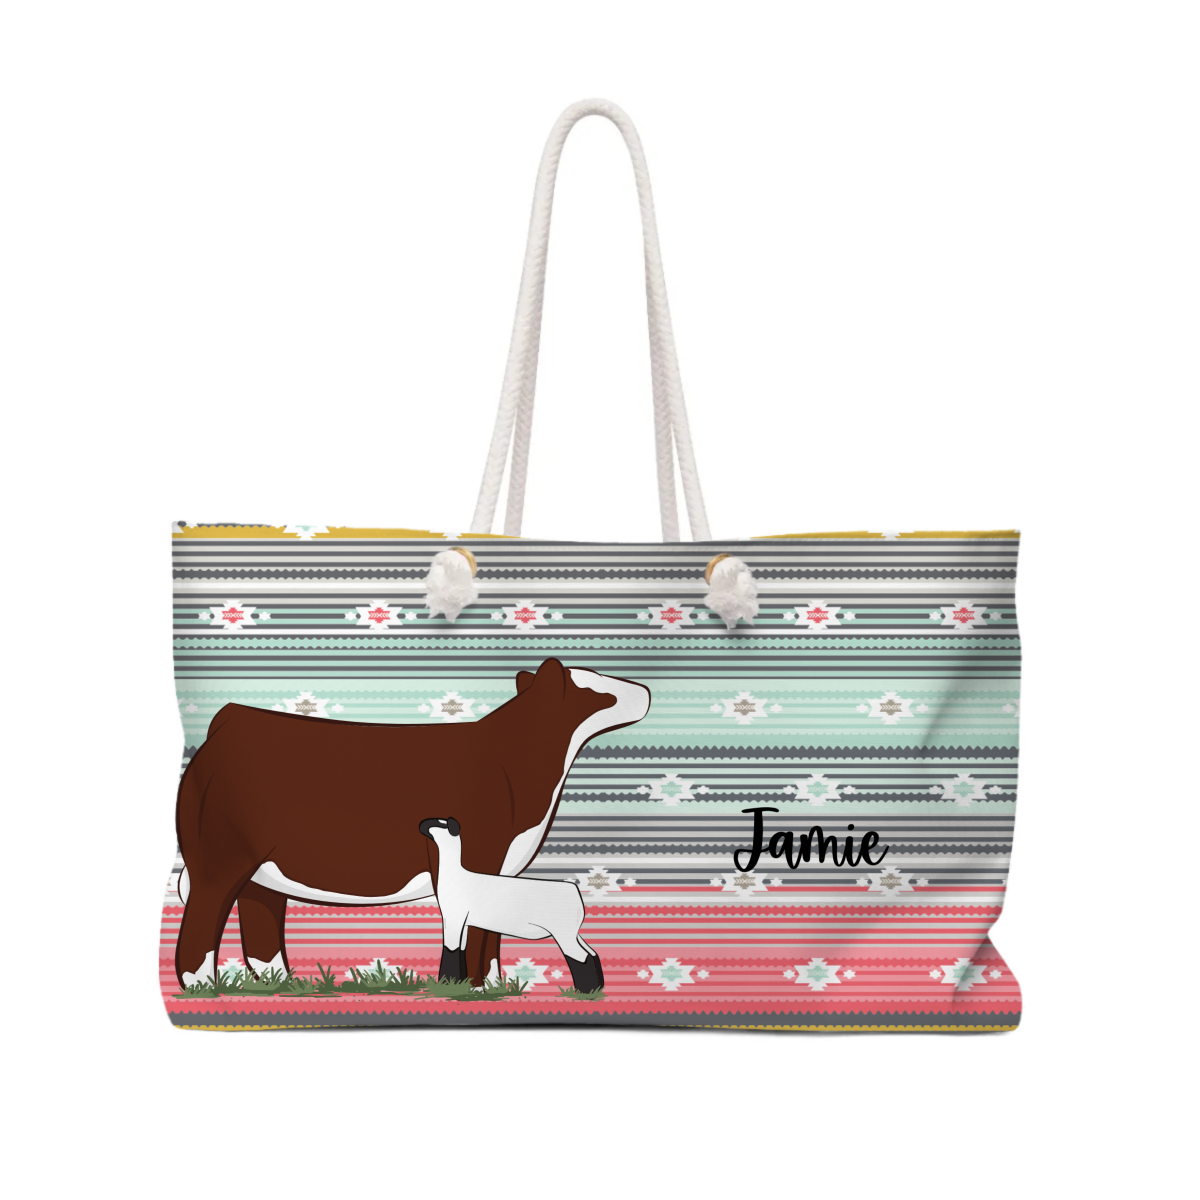 Personalized-Livestock-Tote Bag - Serape Pattern